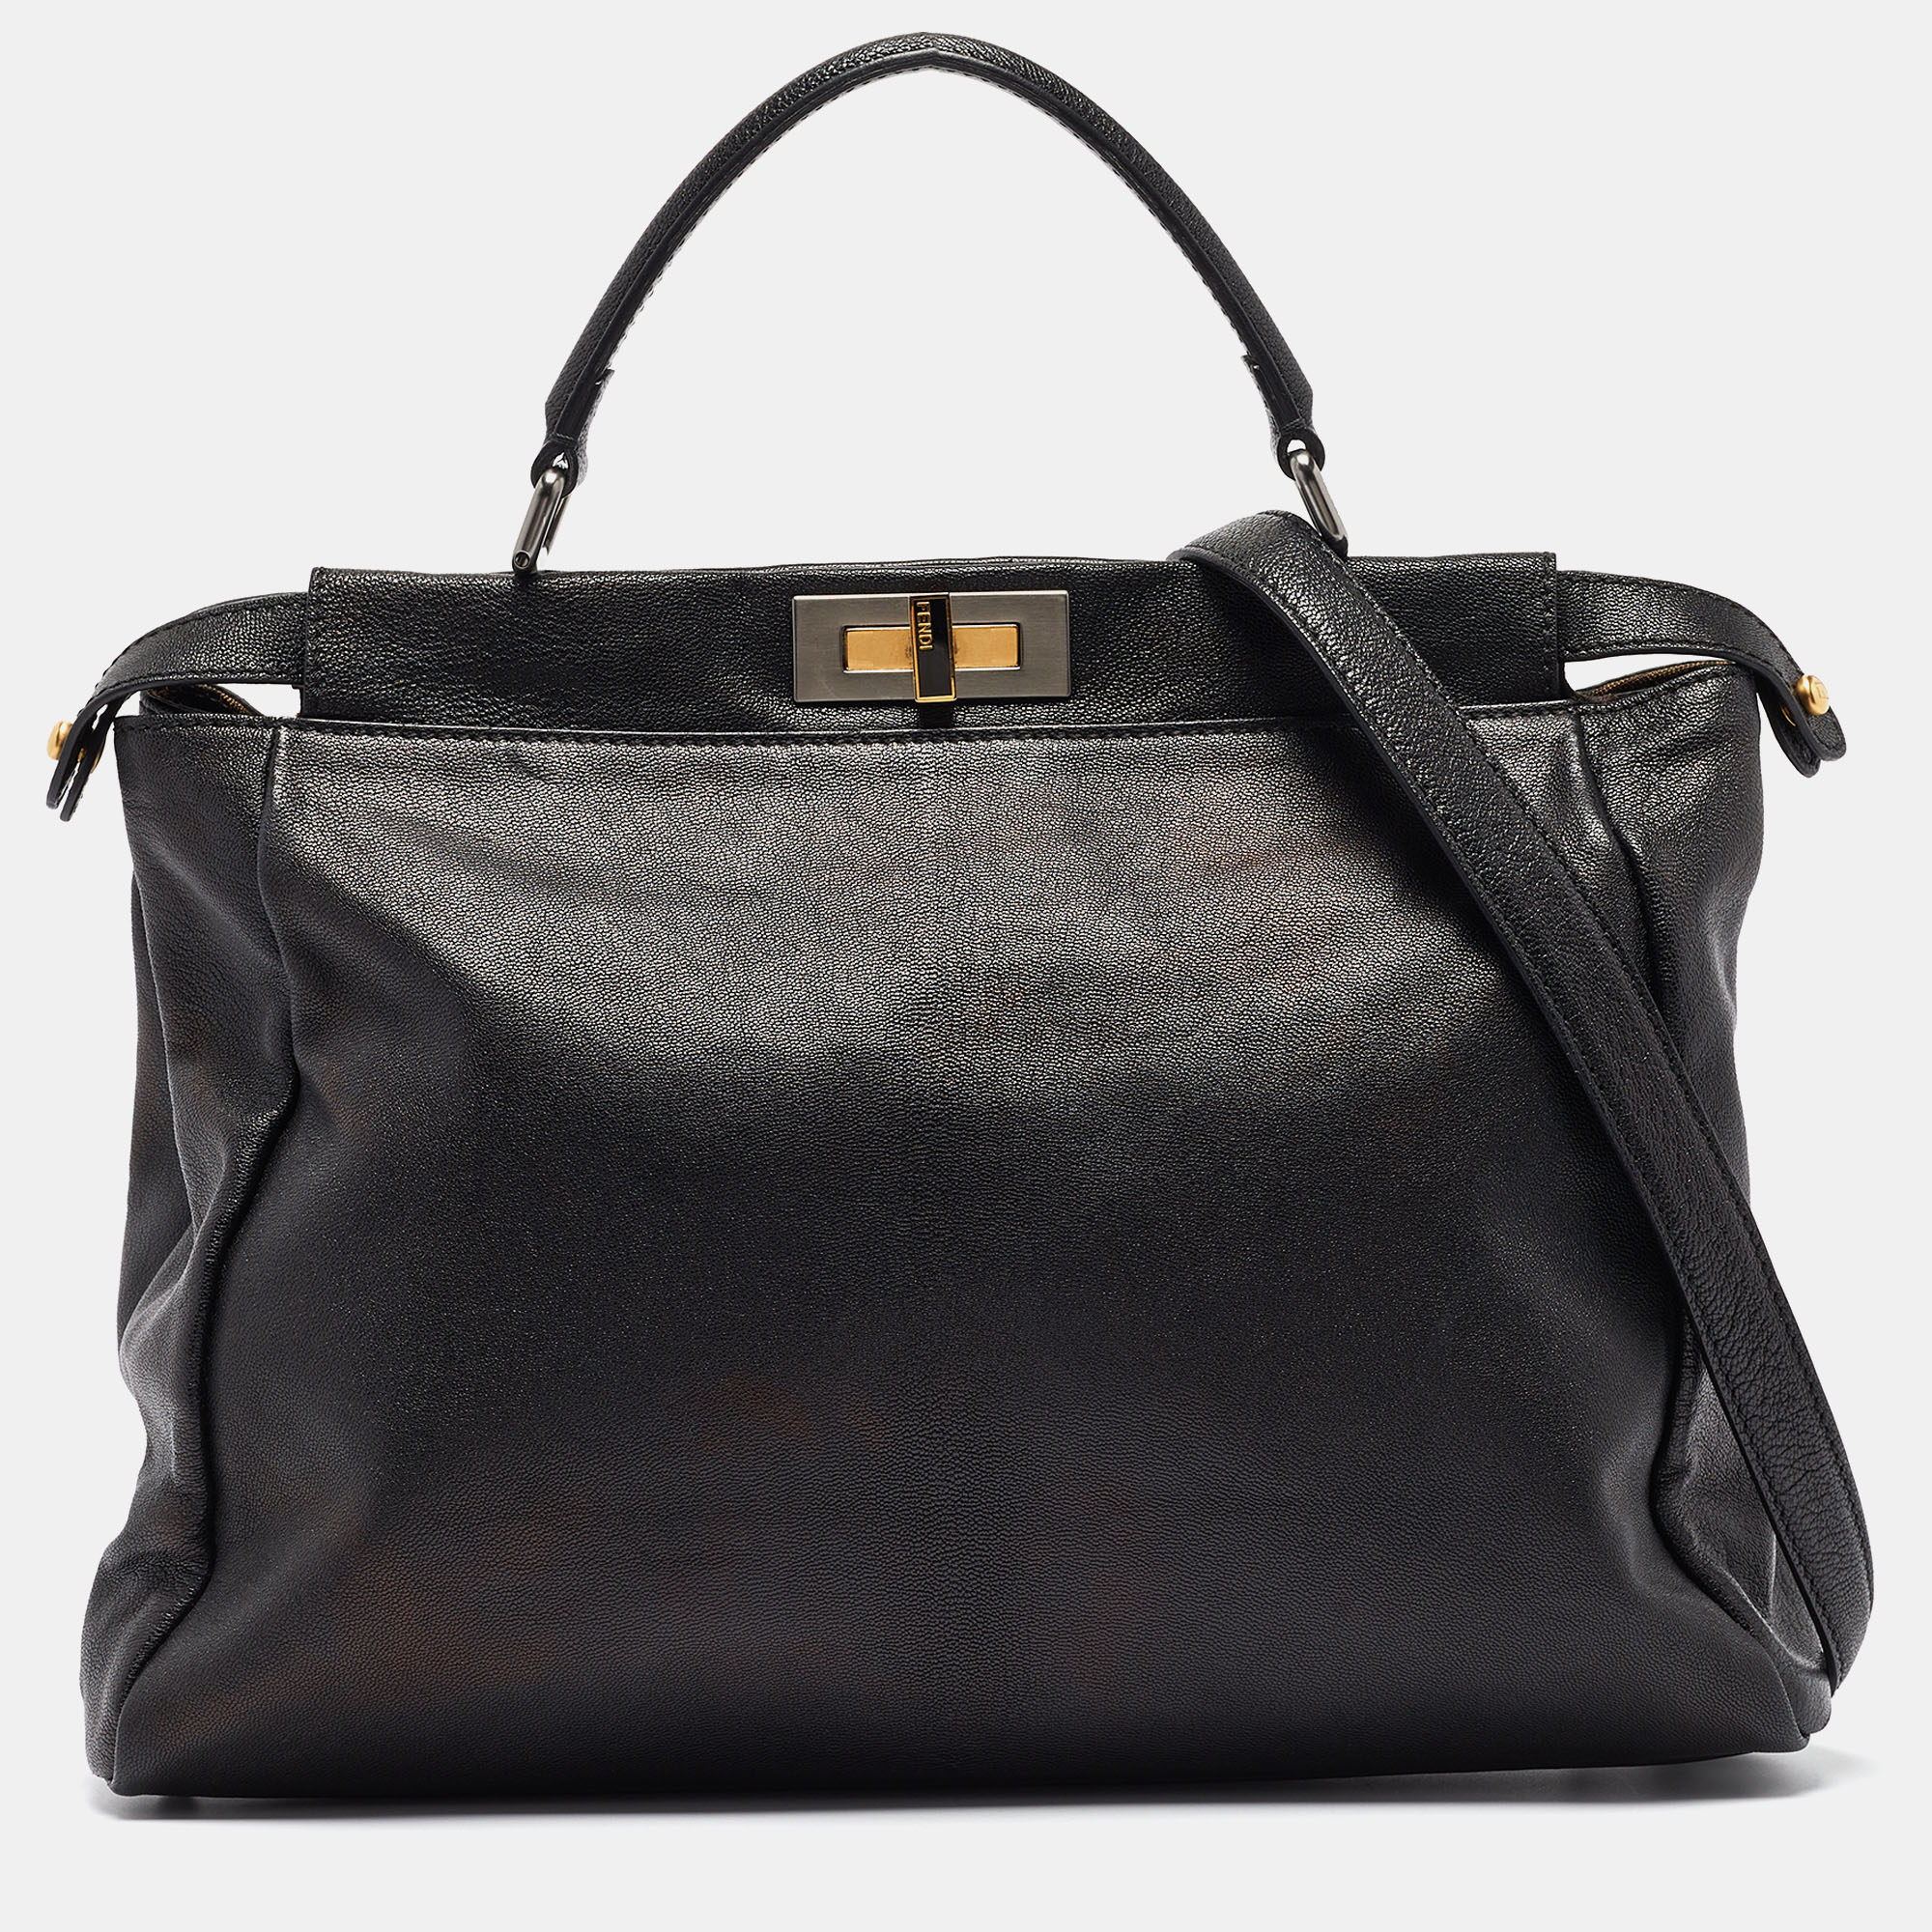 Pre-owned Fendi Black Leather Large Peekaboo Top Handle Bag